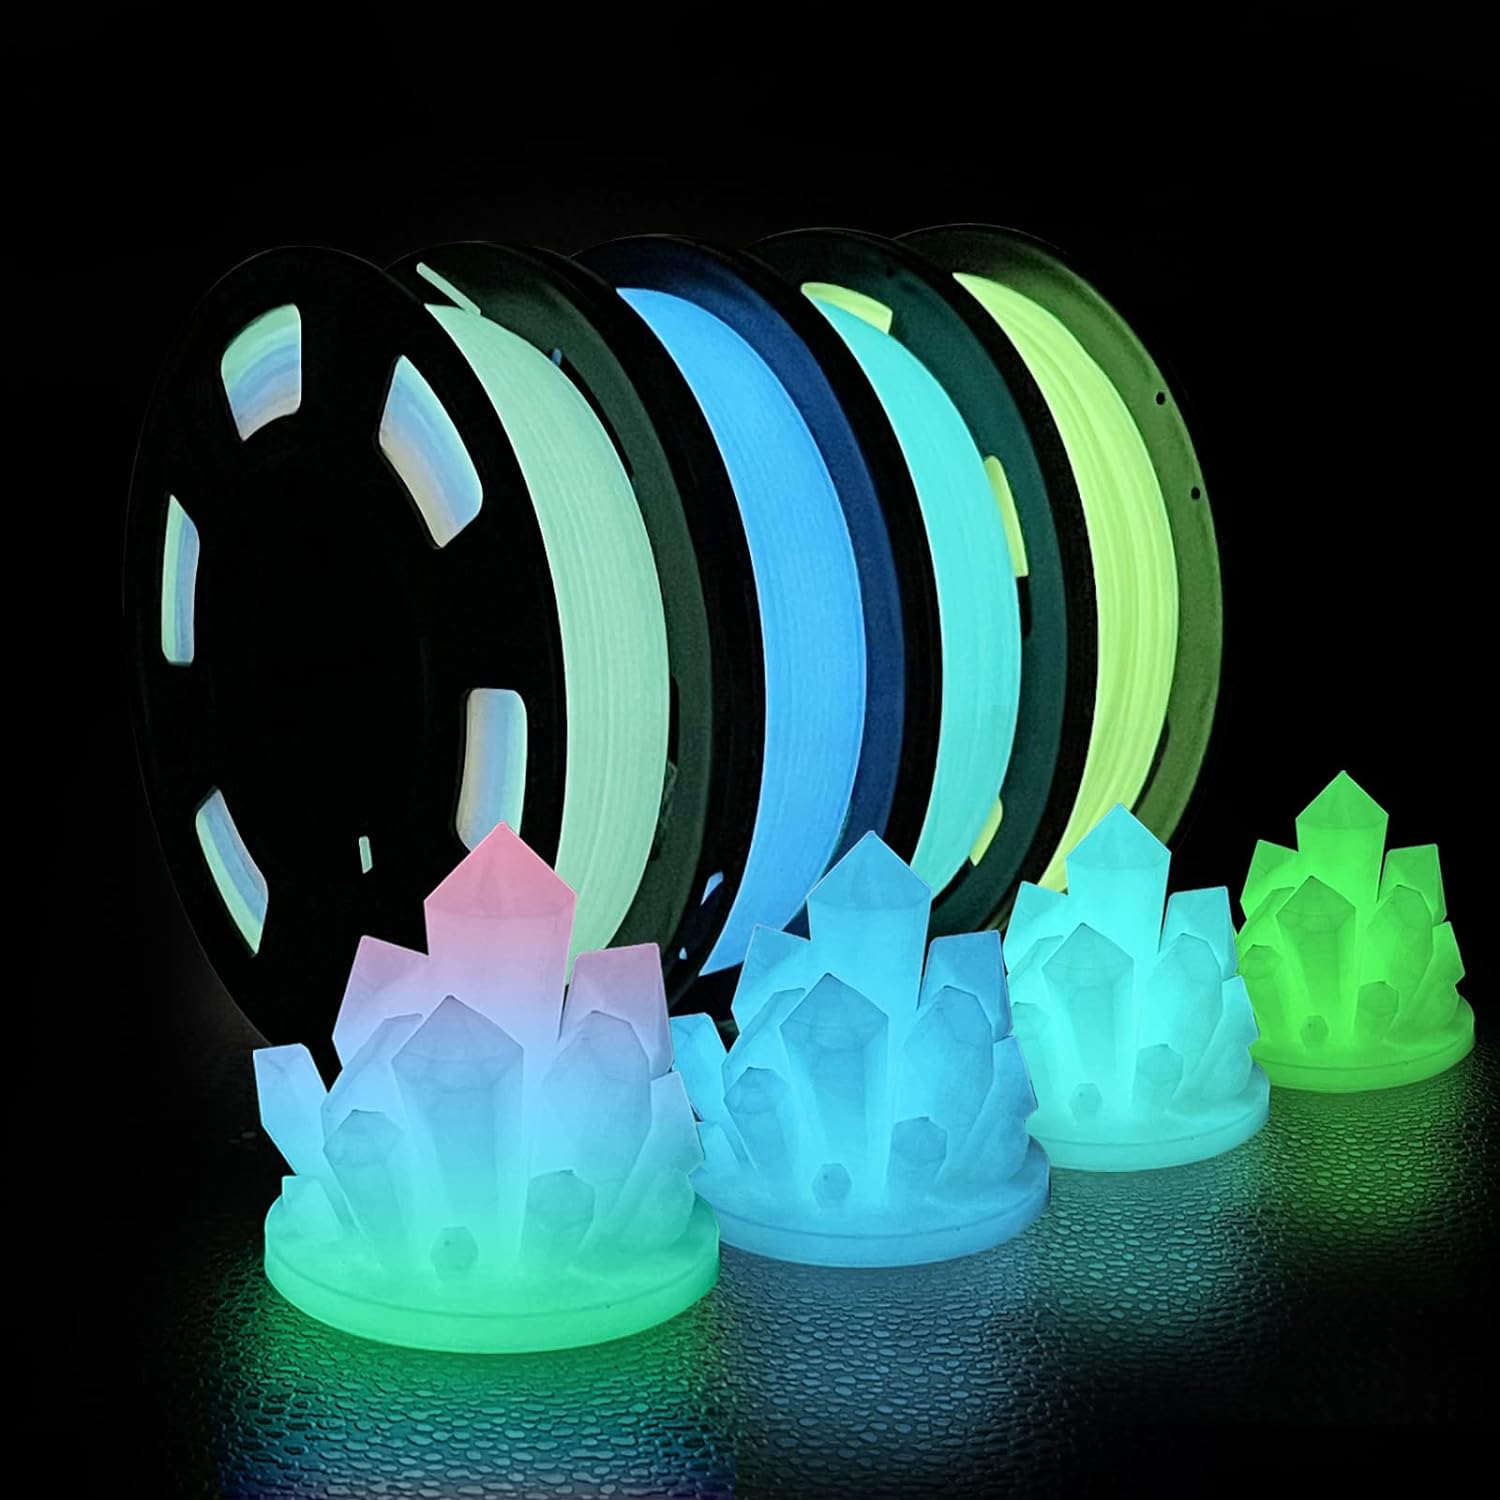 3d-printer-filament-bundle-glow-in-the-dark-filament-multicolor-green-blue-and-blue-green-pla-filament-175-mm-dimensiona 3D Printer Filament Bundle Review